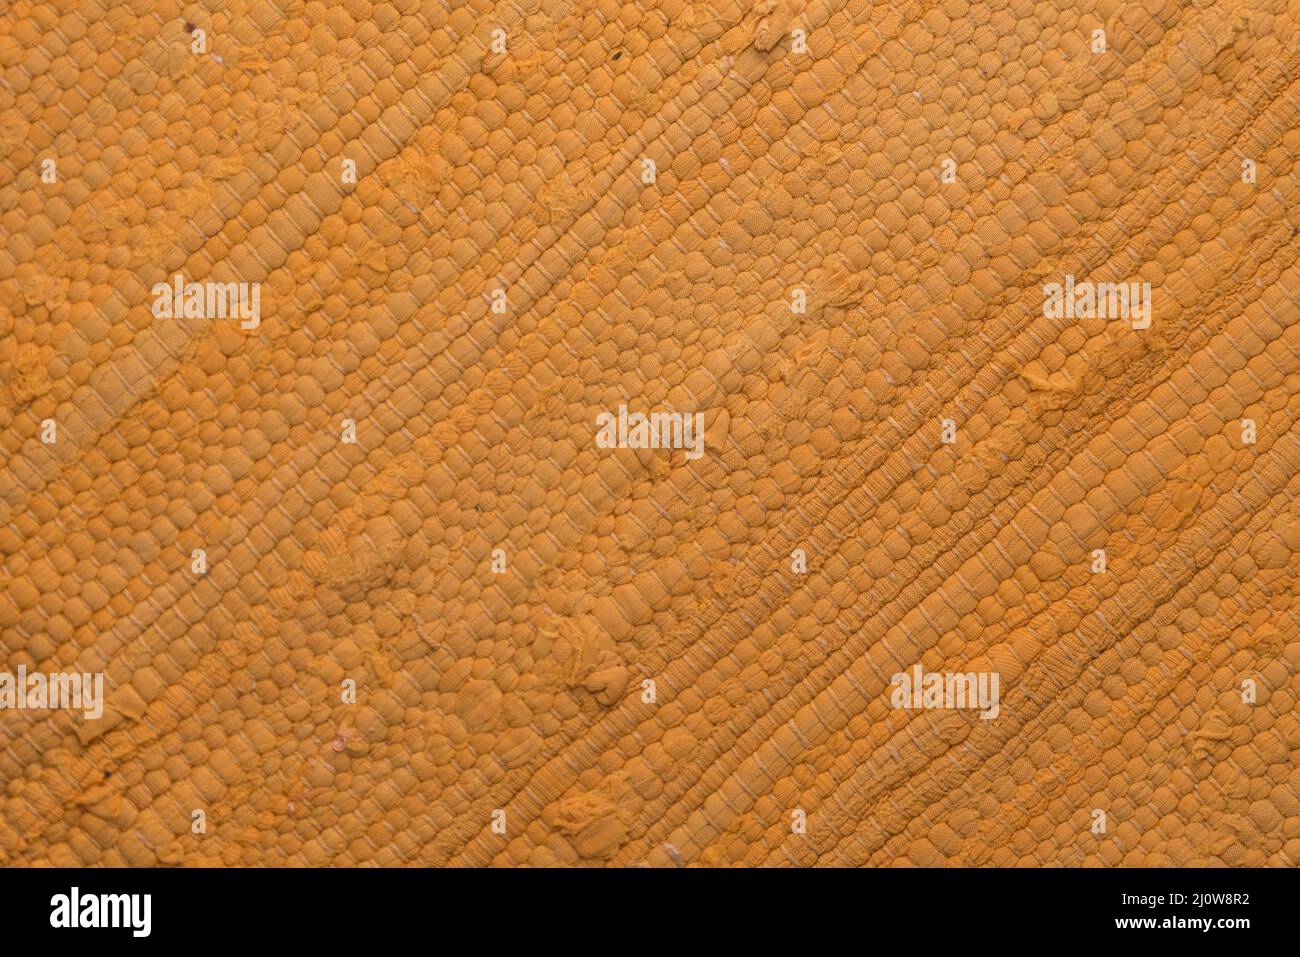 Estructura y estructura de una alfombra naranja - alfombra manchada y moqueta del piso Foto de stock